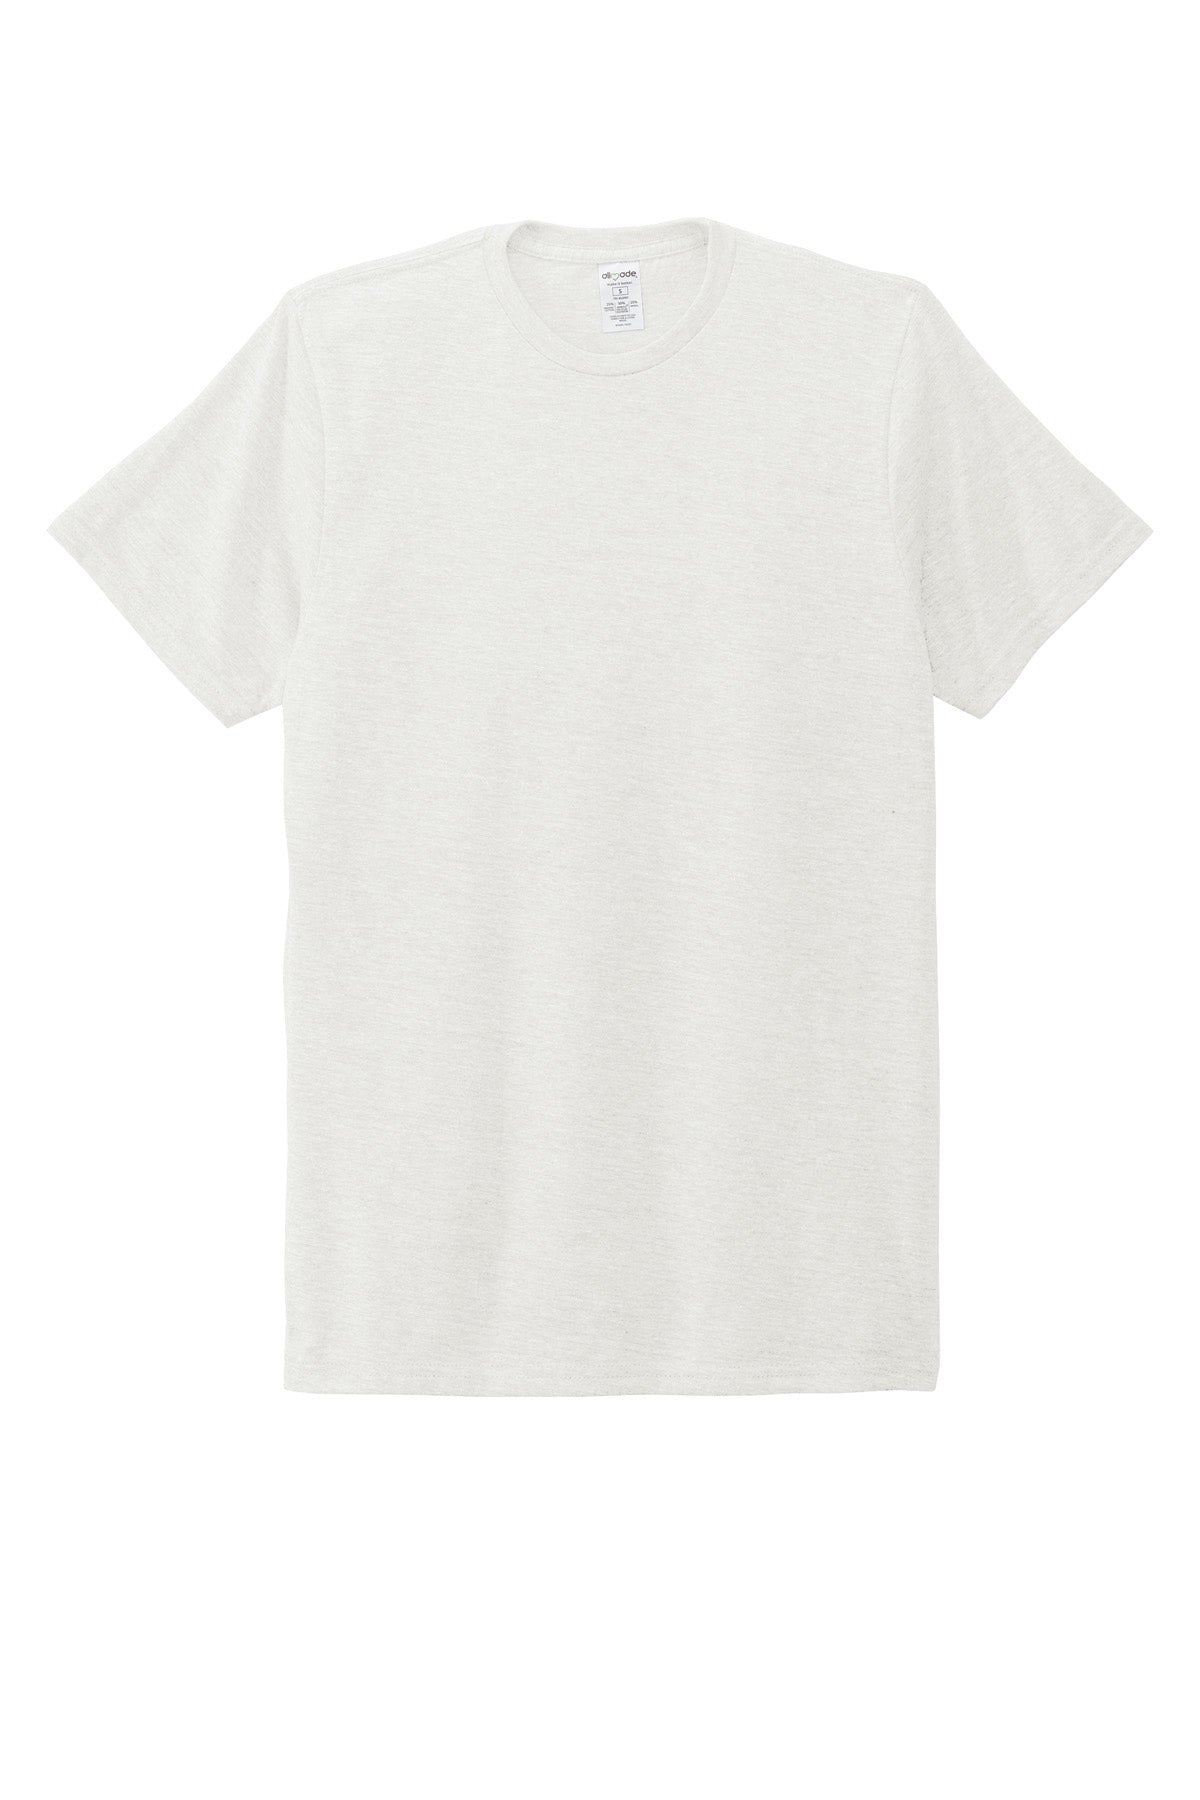 XS / Fairly White Custom Allmade Unisex Tri-Blend T-Shirt